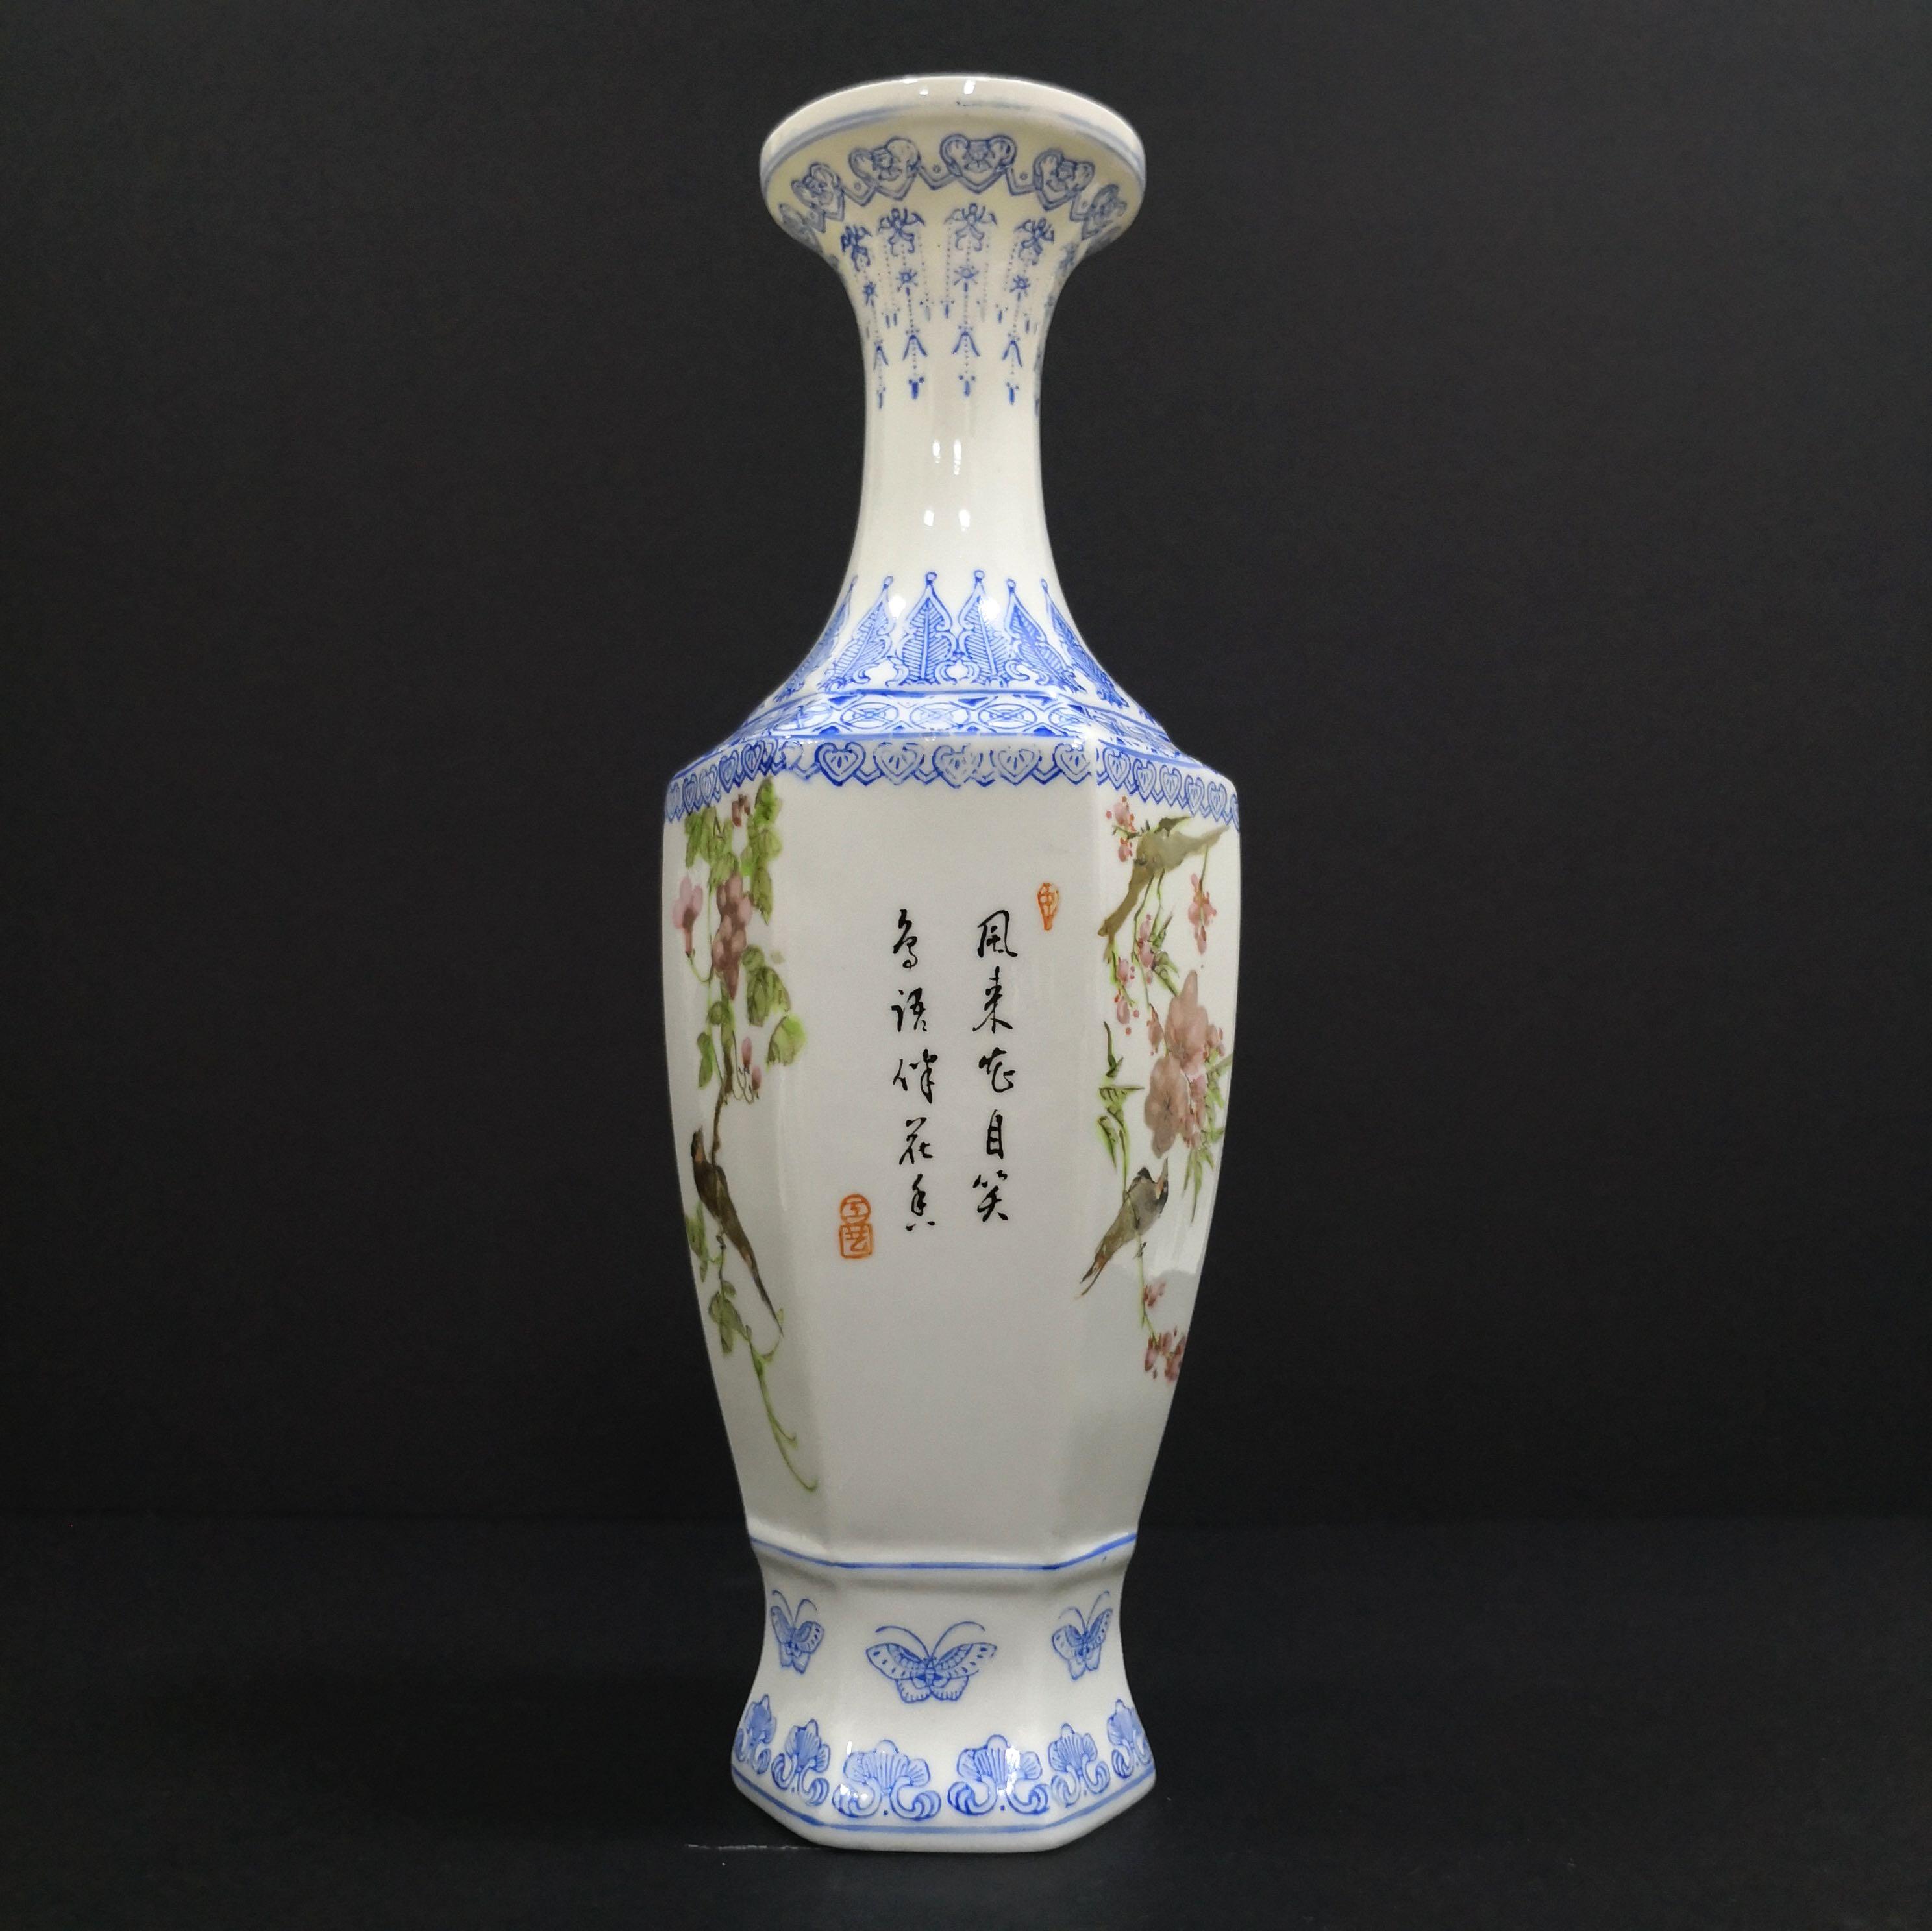 Old Jing De Zhen hand painted bird floral egg shell Porcelain vase  早期景德镇手绘六方花鸟诗文超级薄胎花瓶 (B)